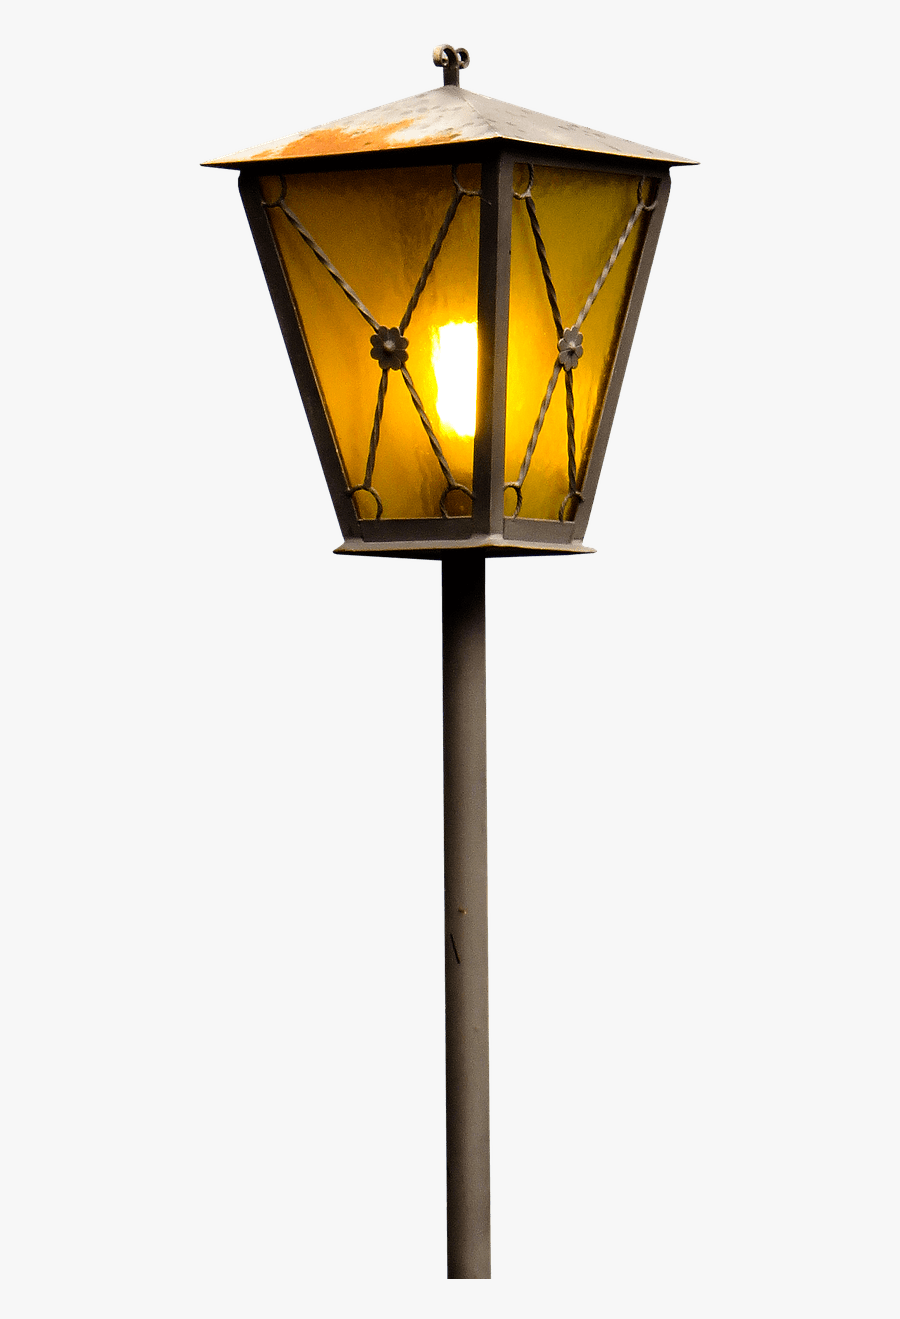 Burning Street Lantern - Street Light At Night Png, Transparent Clipart